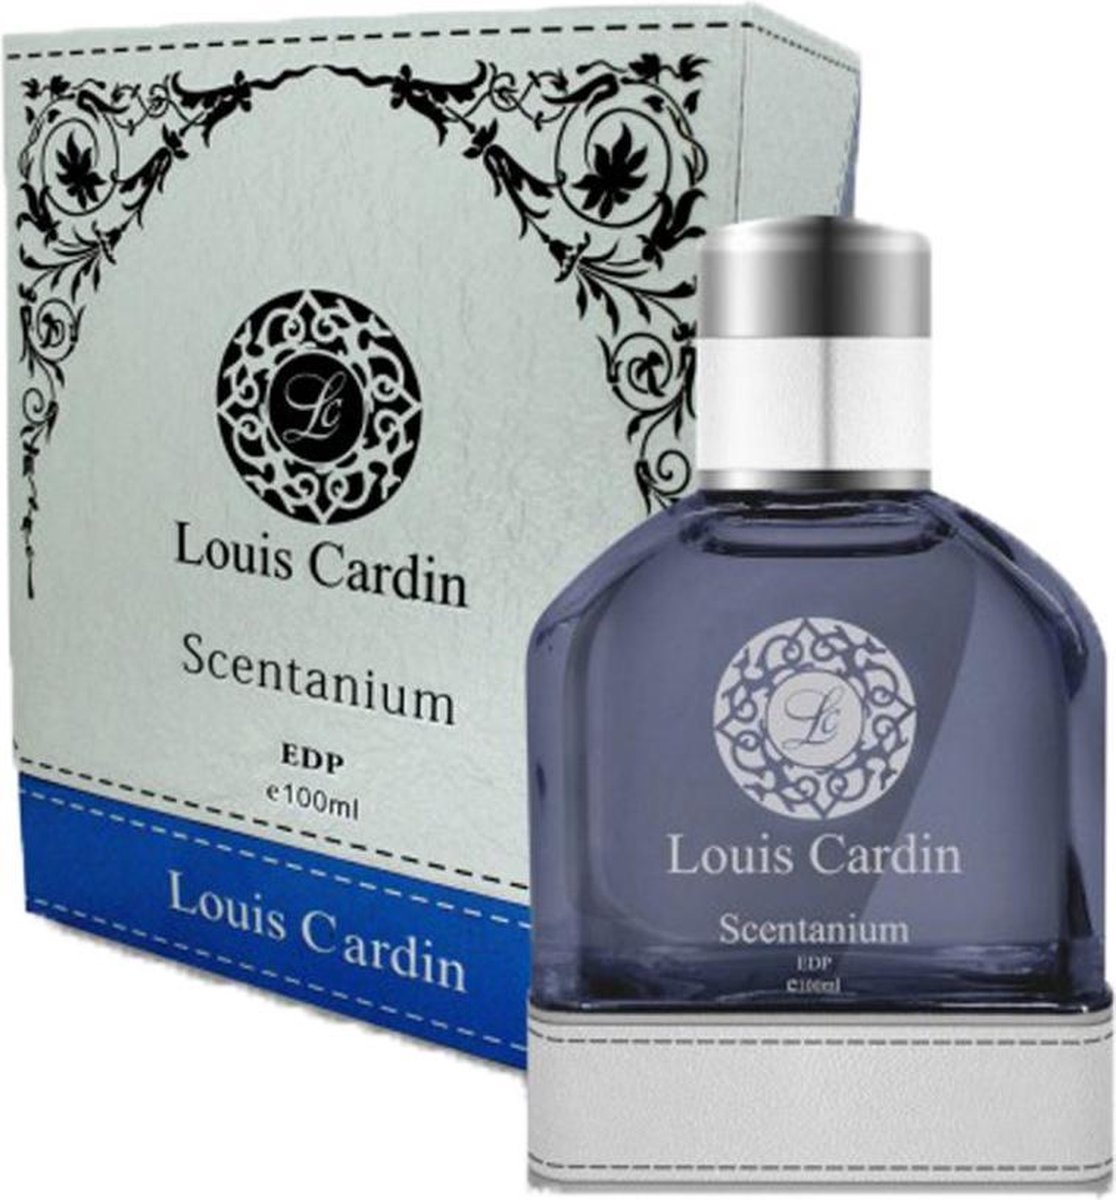 Louis Cardin 